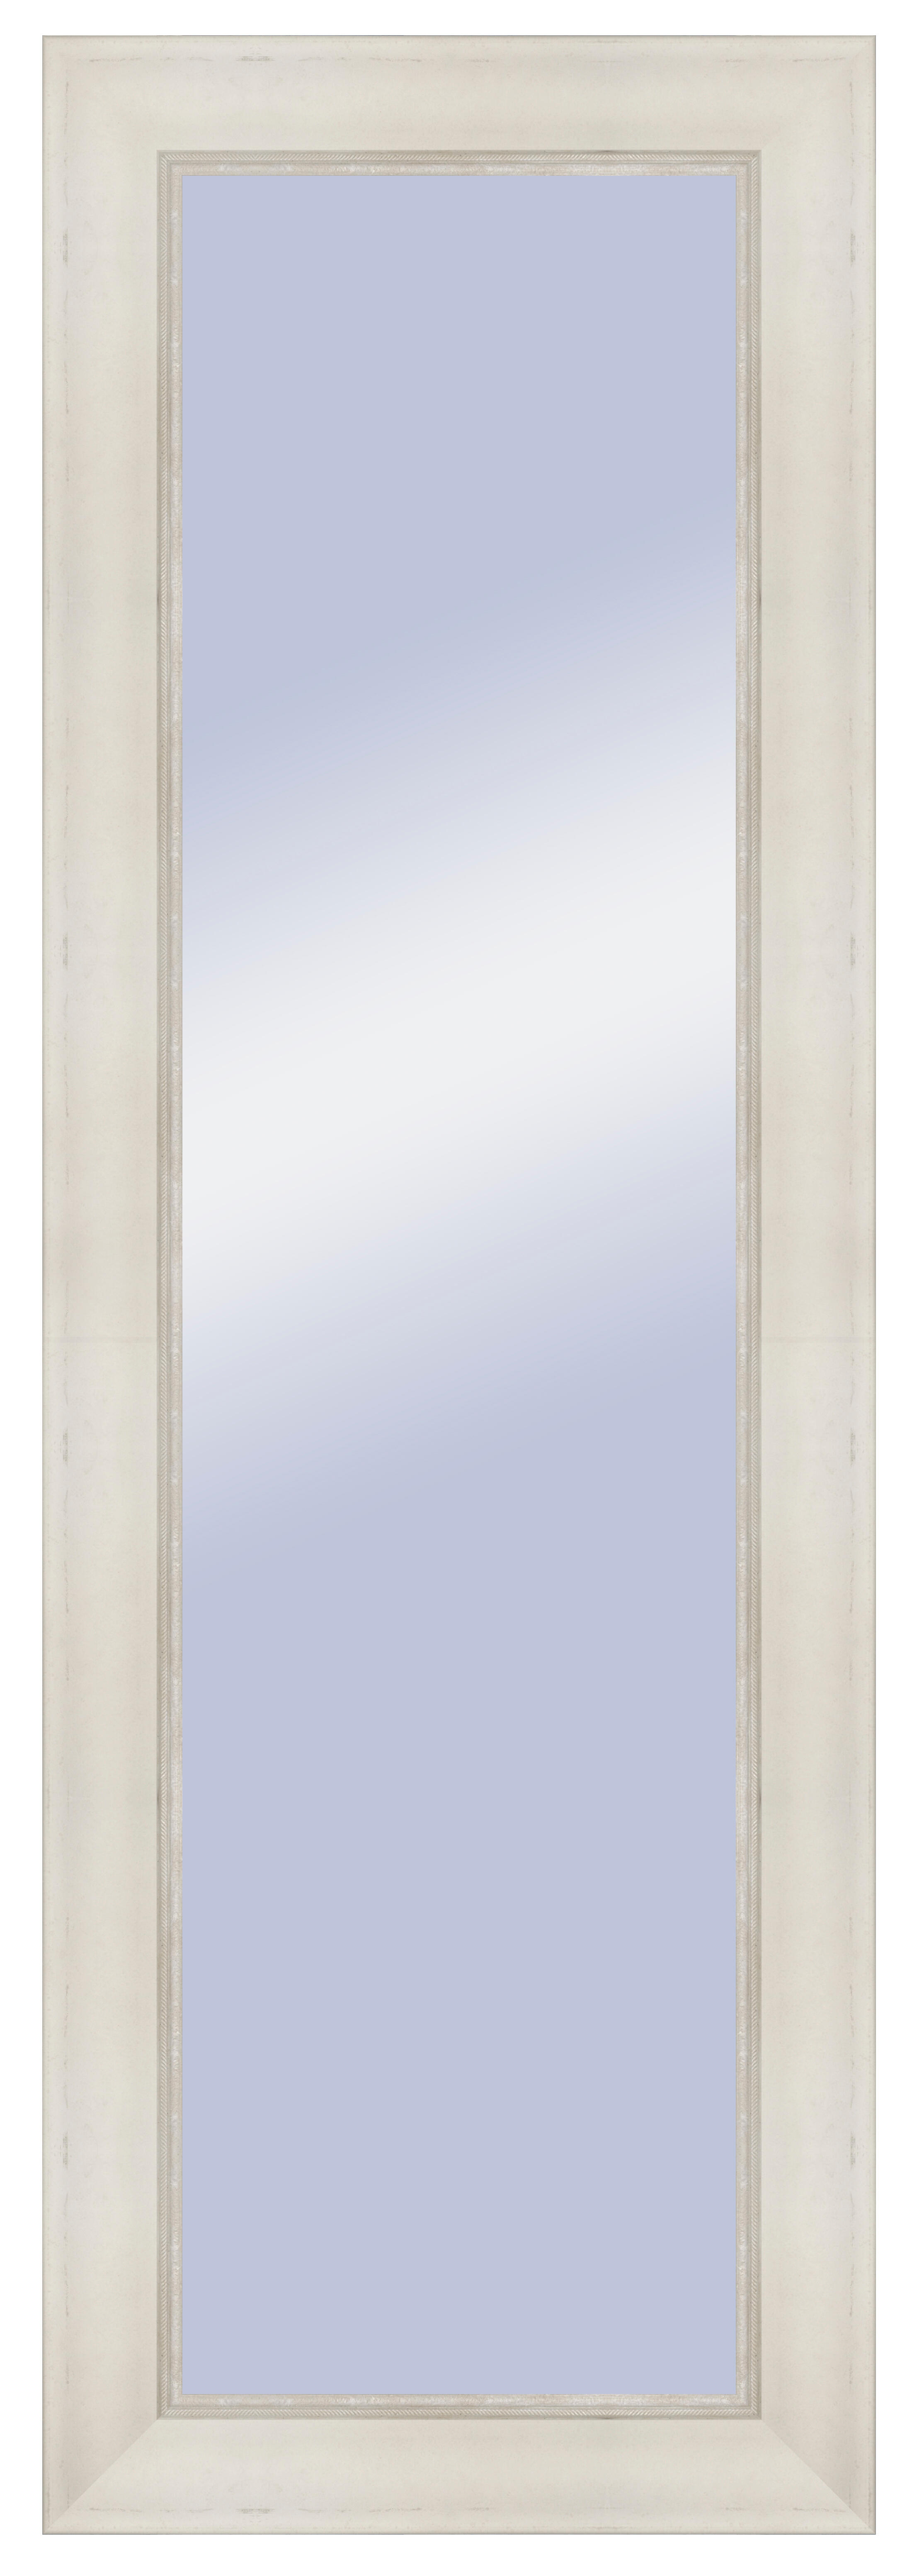 Espejo enmarcado rectangular celine blanco 135 x 45 cm